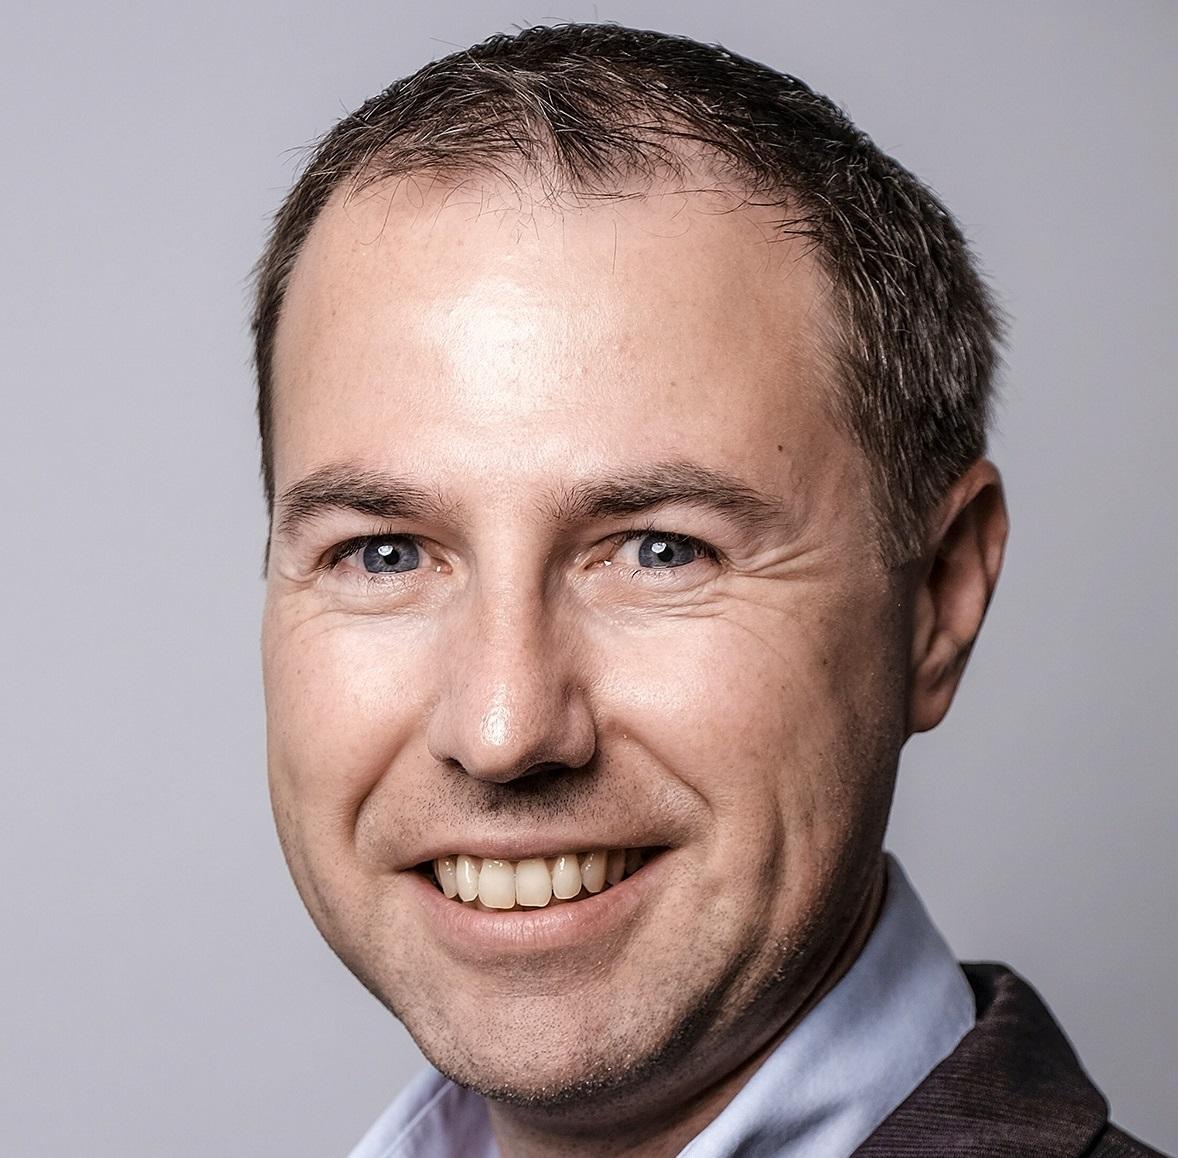 Dr.-Ing. Joël Wilsius, research engineer at ArcelorMittal Global R&D